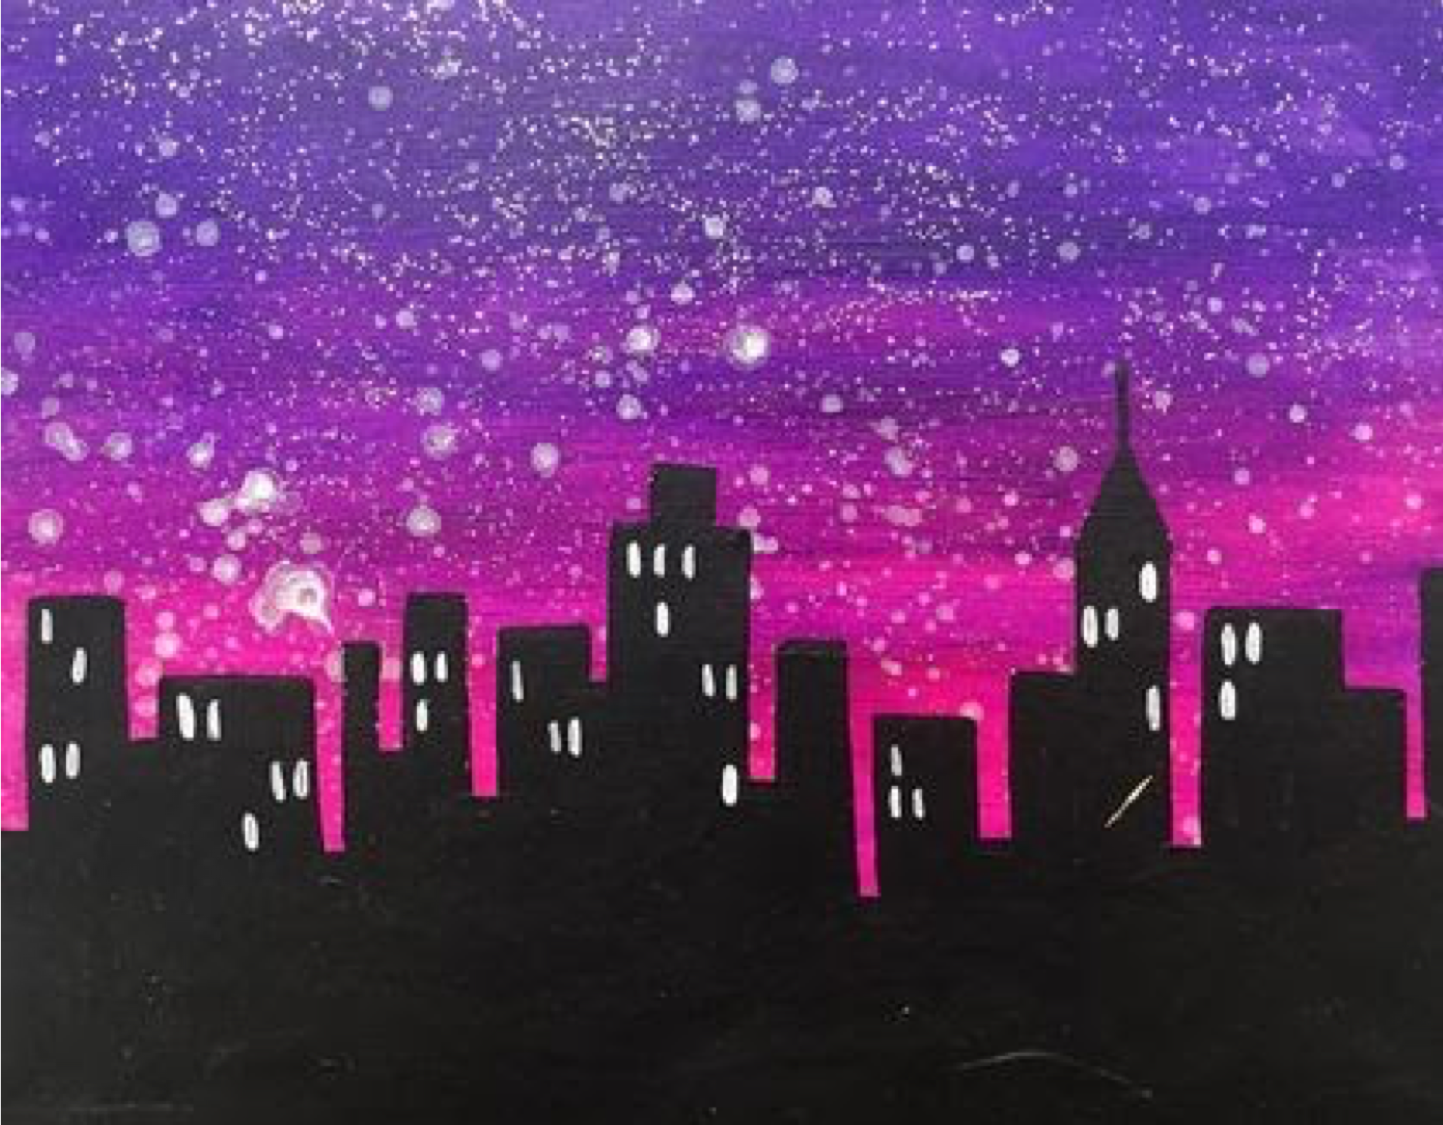 Artwork of the Chicago city skyline.